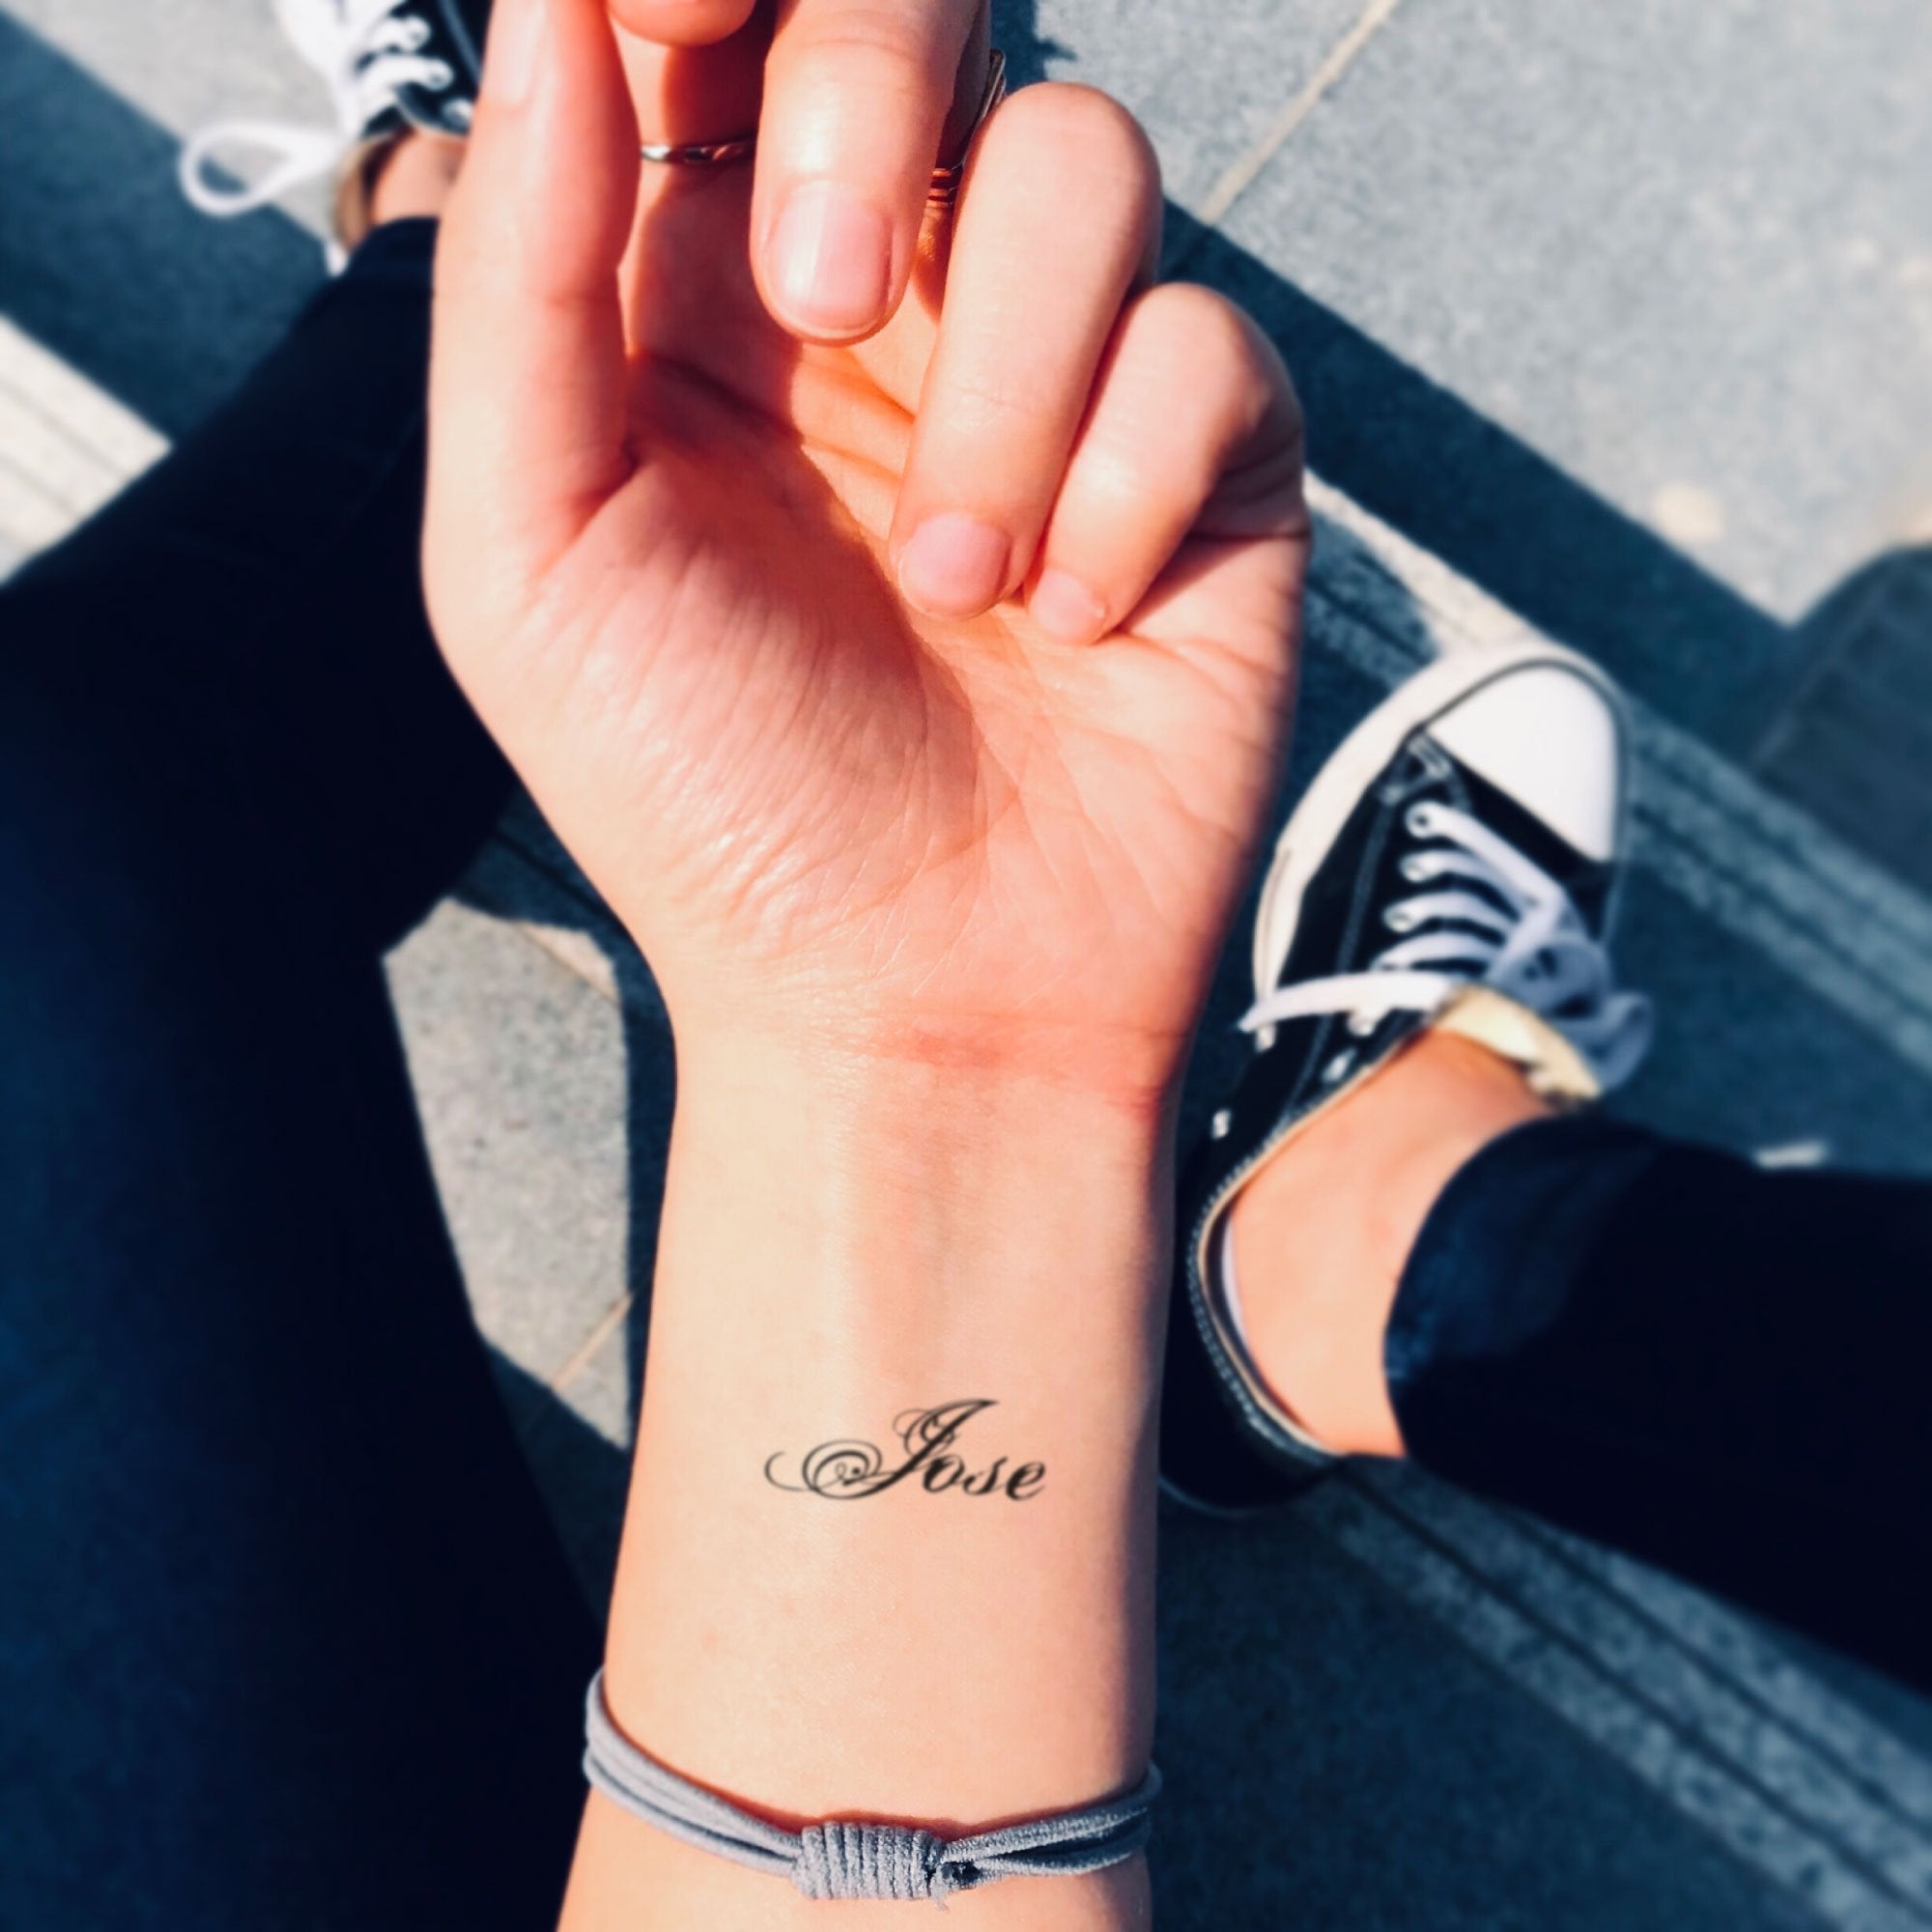 jose tattoo letters